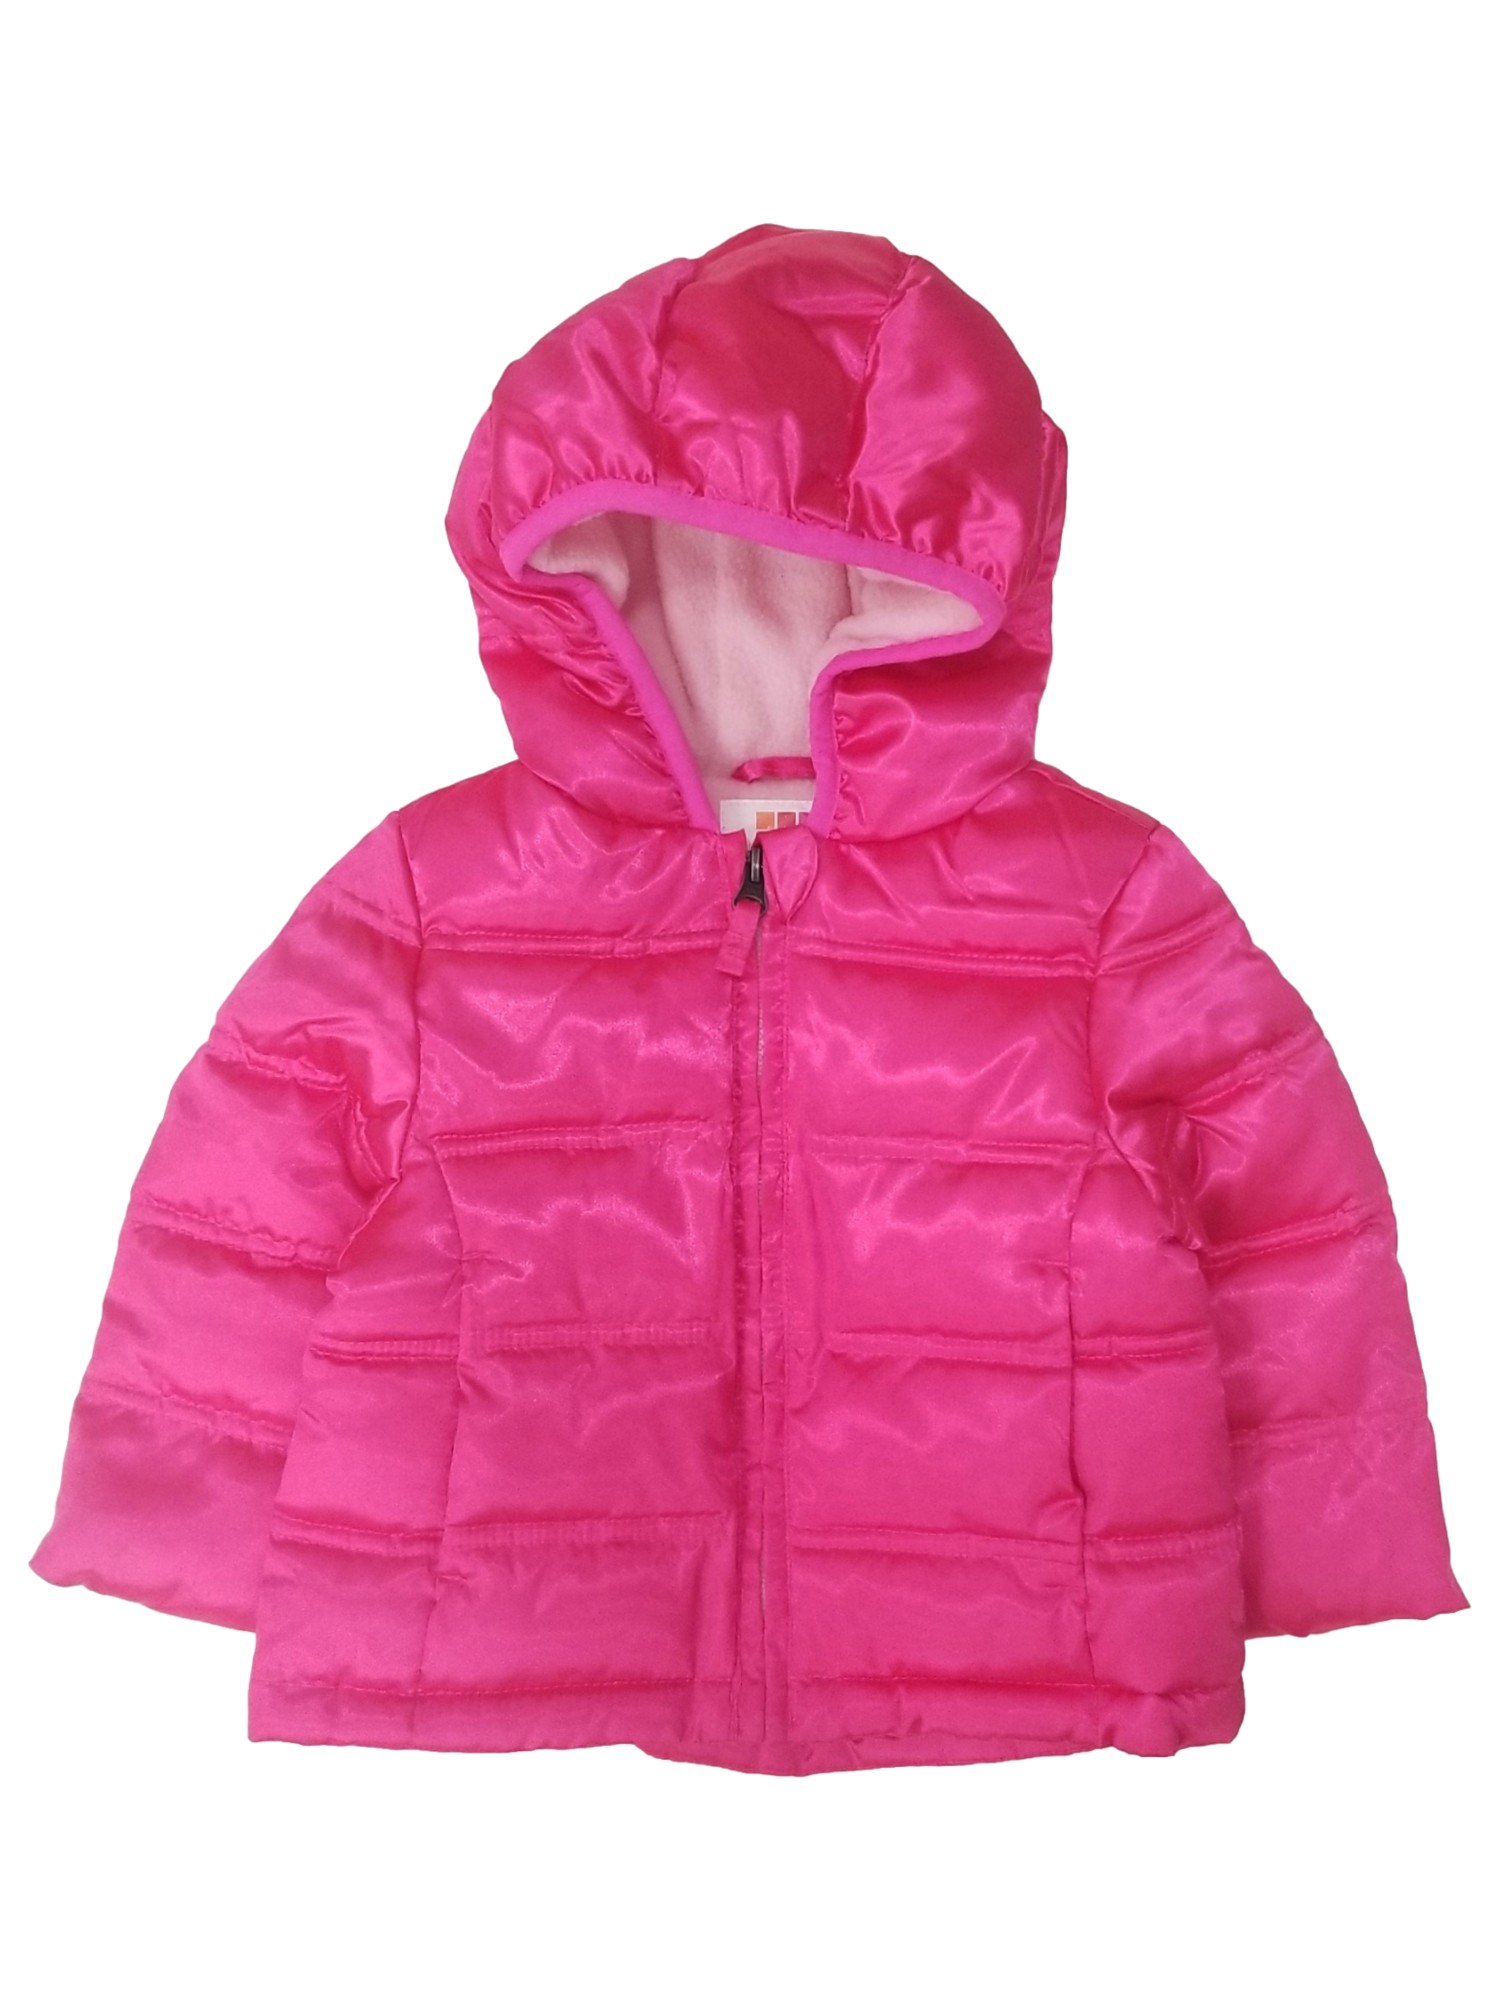 Healthtex Infant Girls Hot Pink Shiny Ribbed Snow Coat Hood Baby Ski Jacket 12m